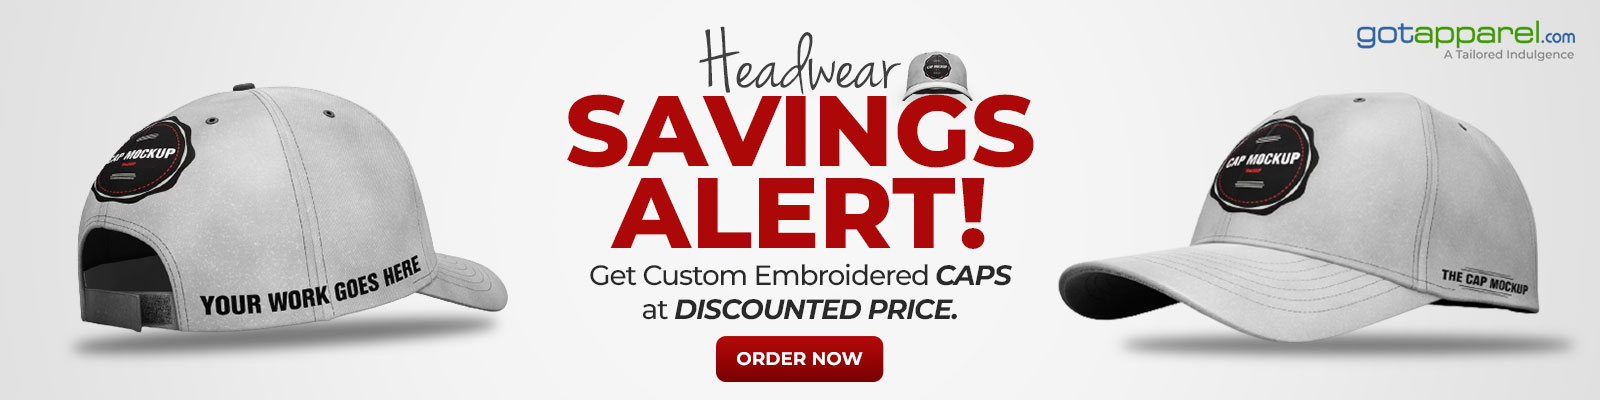 Headwear-savings-alert.jpg